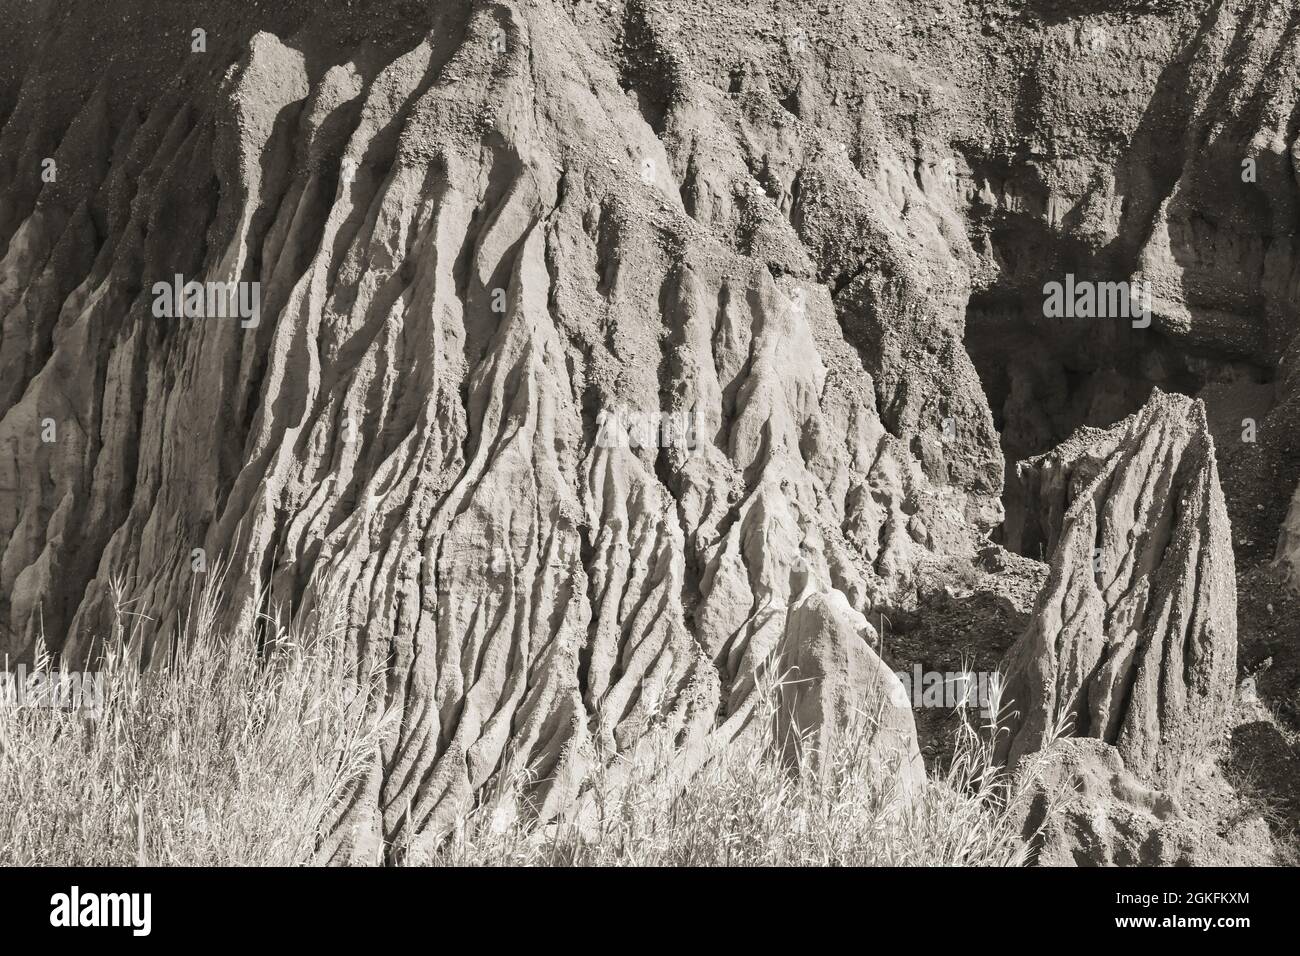 Felsformation mit Erosion Nahaufnahme Stockfoto